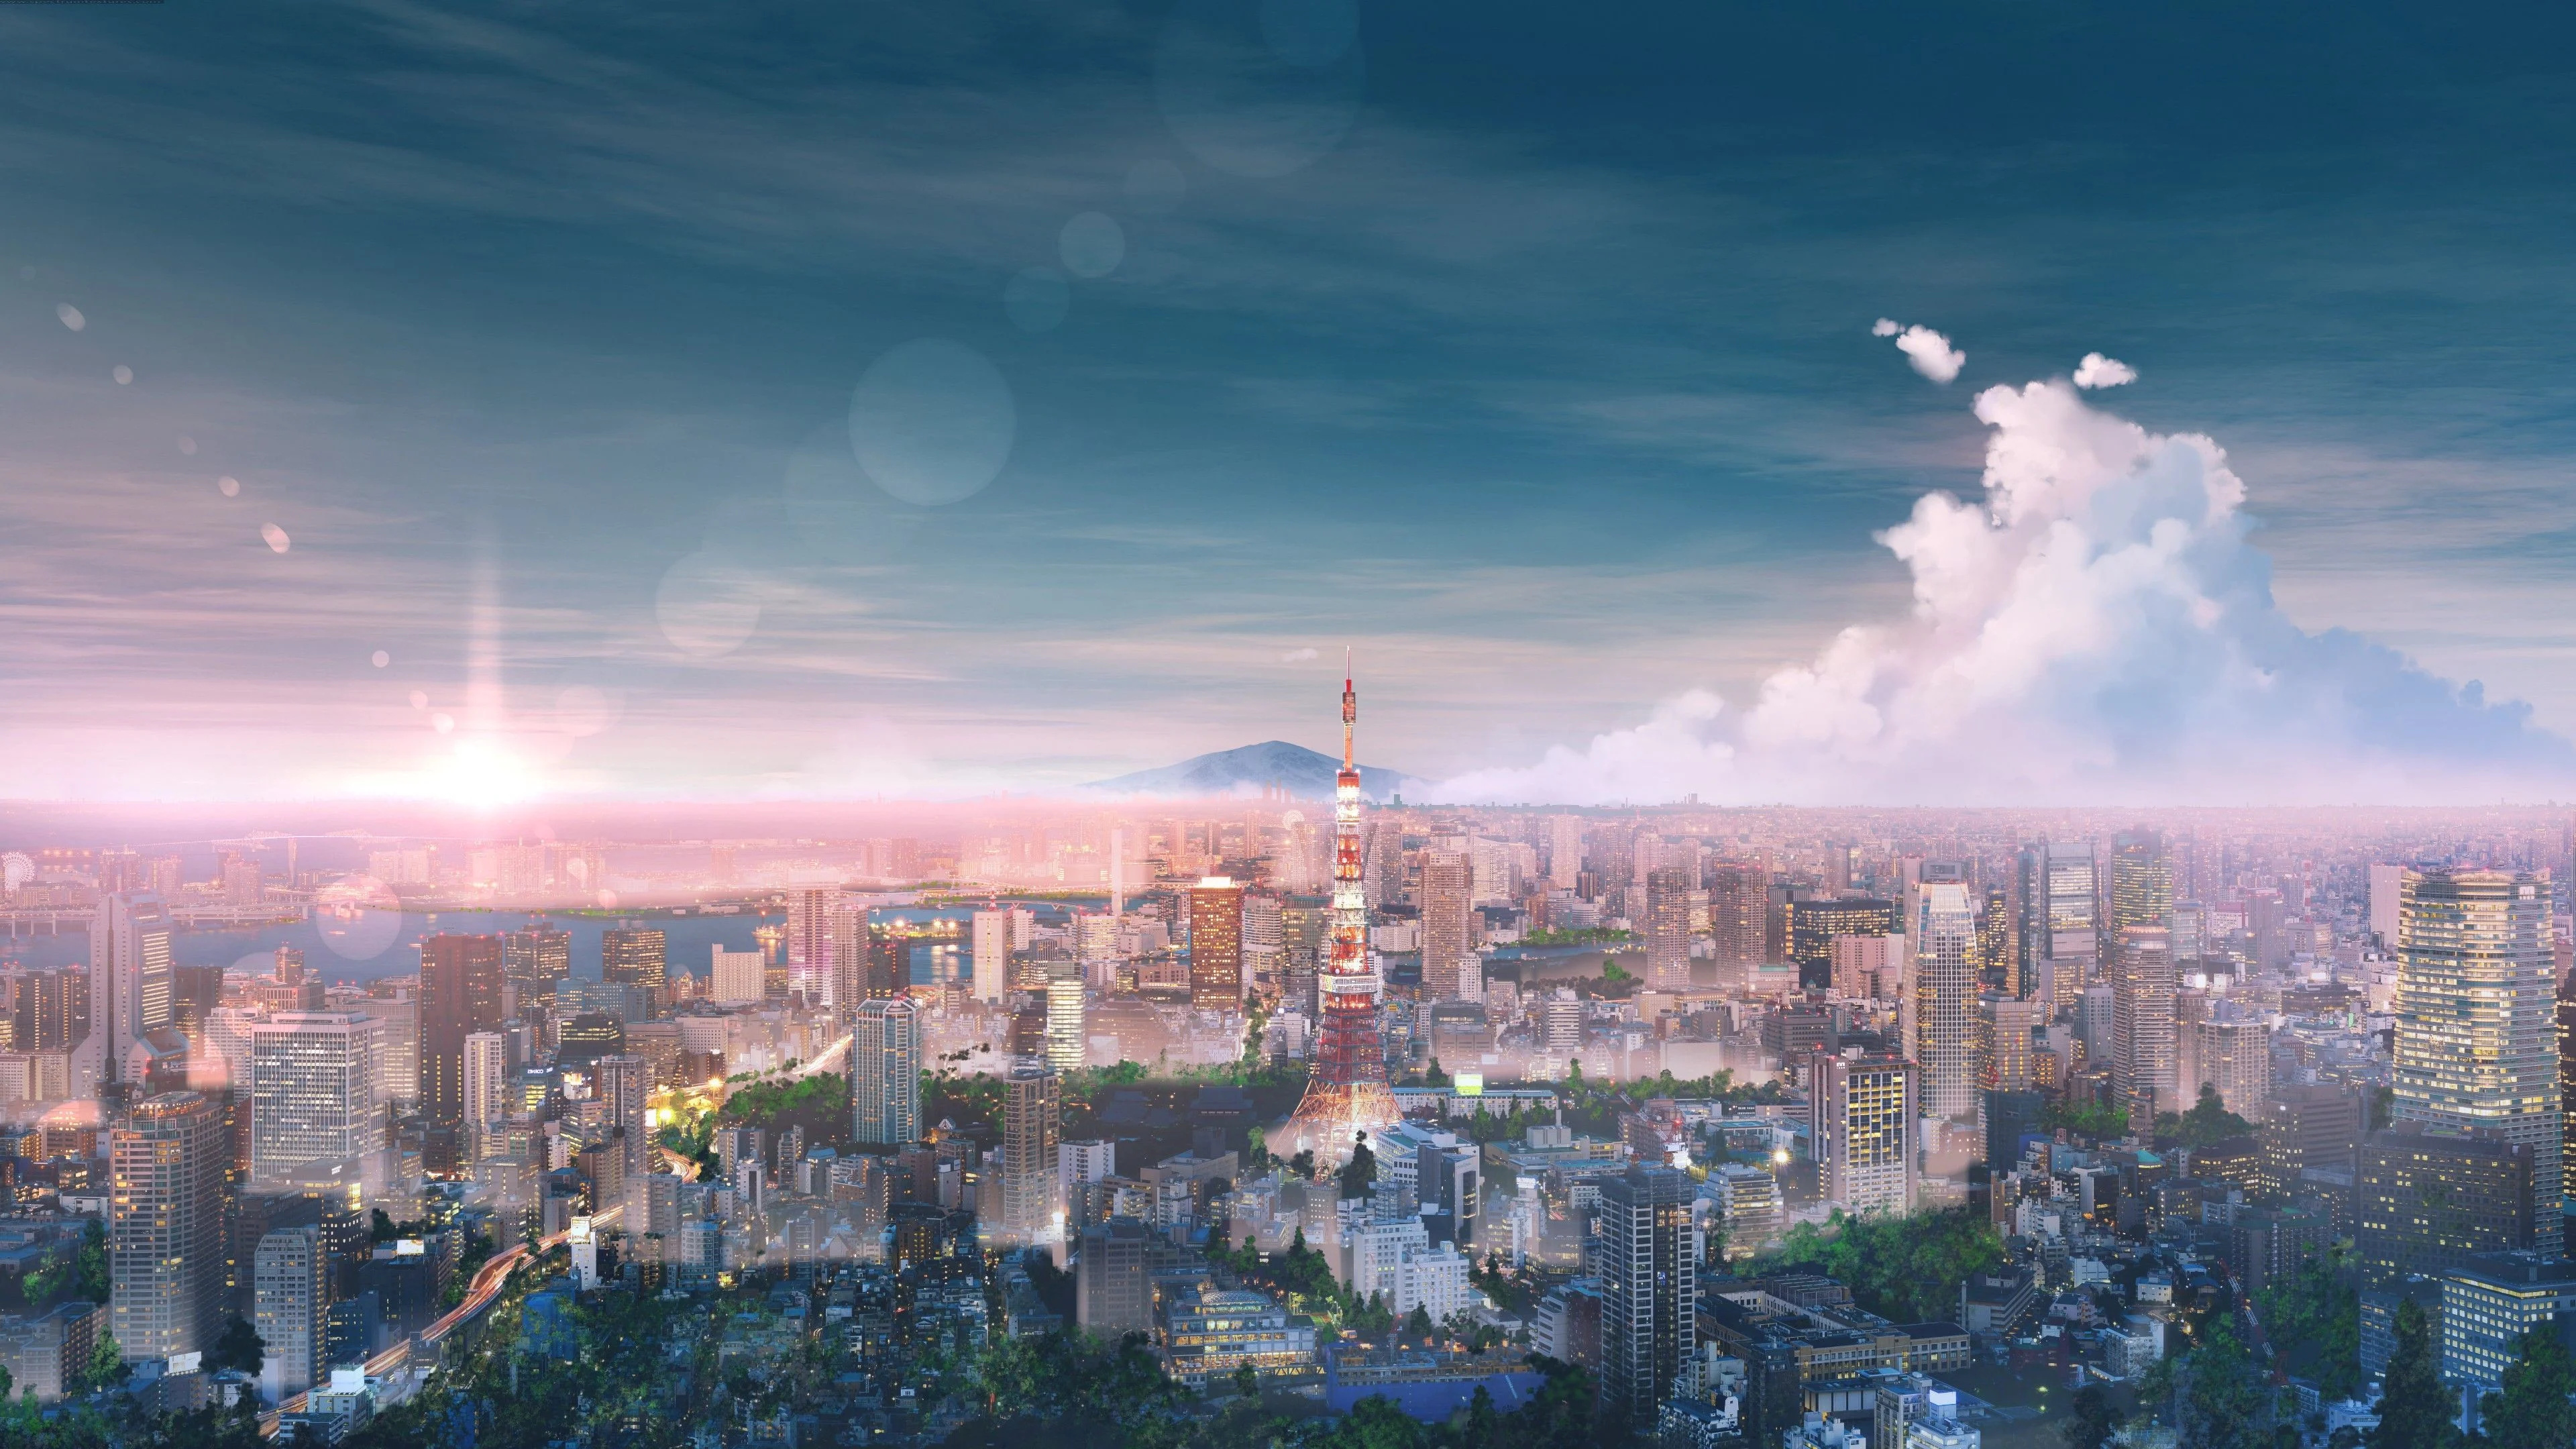 Tokyo Tower, 4K anime wallpapers, Tokyo animation, Otaku culture, 3840x2160 4K Desktop